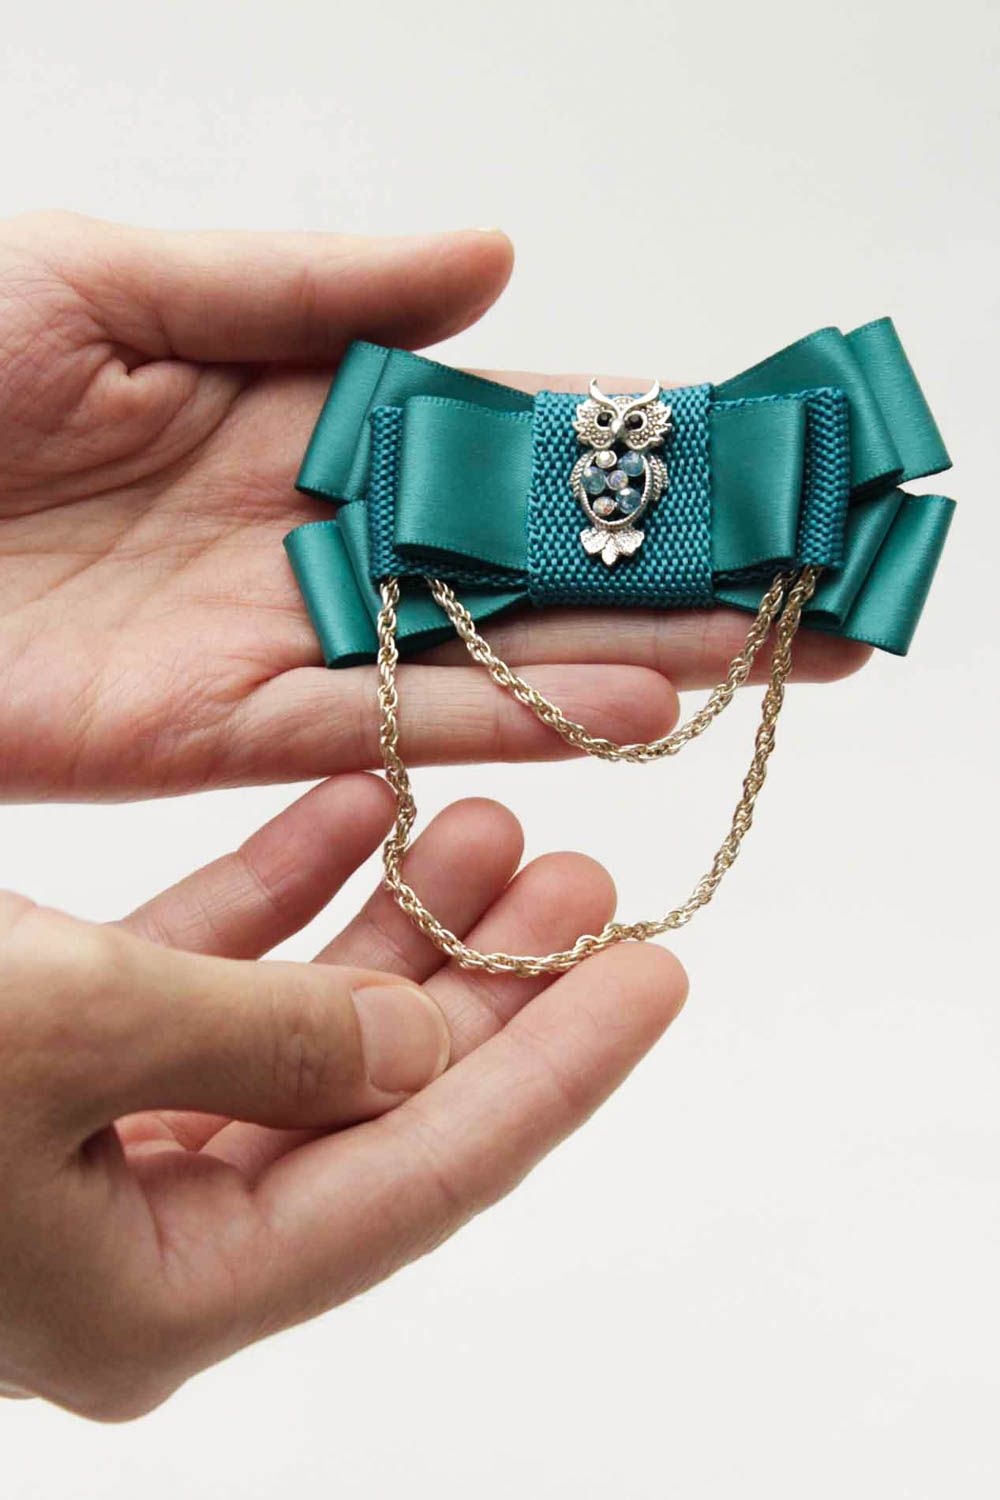 Handmade fabric brooch designer brooch fashion jewelry modern accessories photo 2